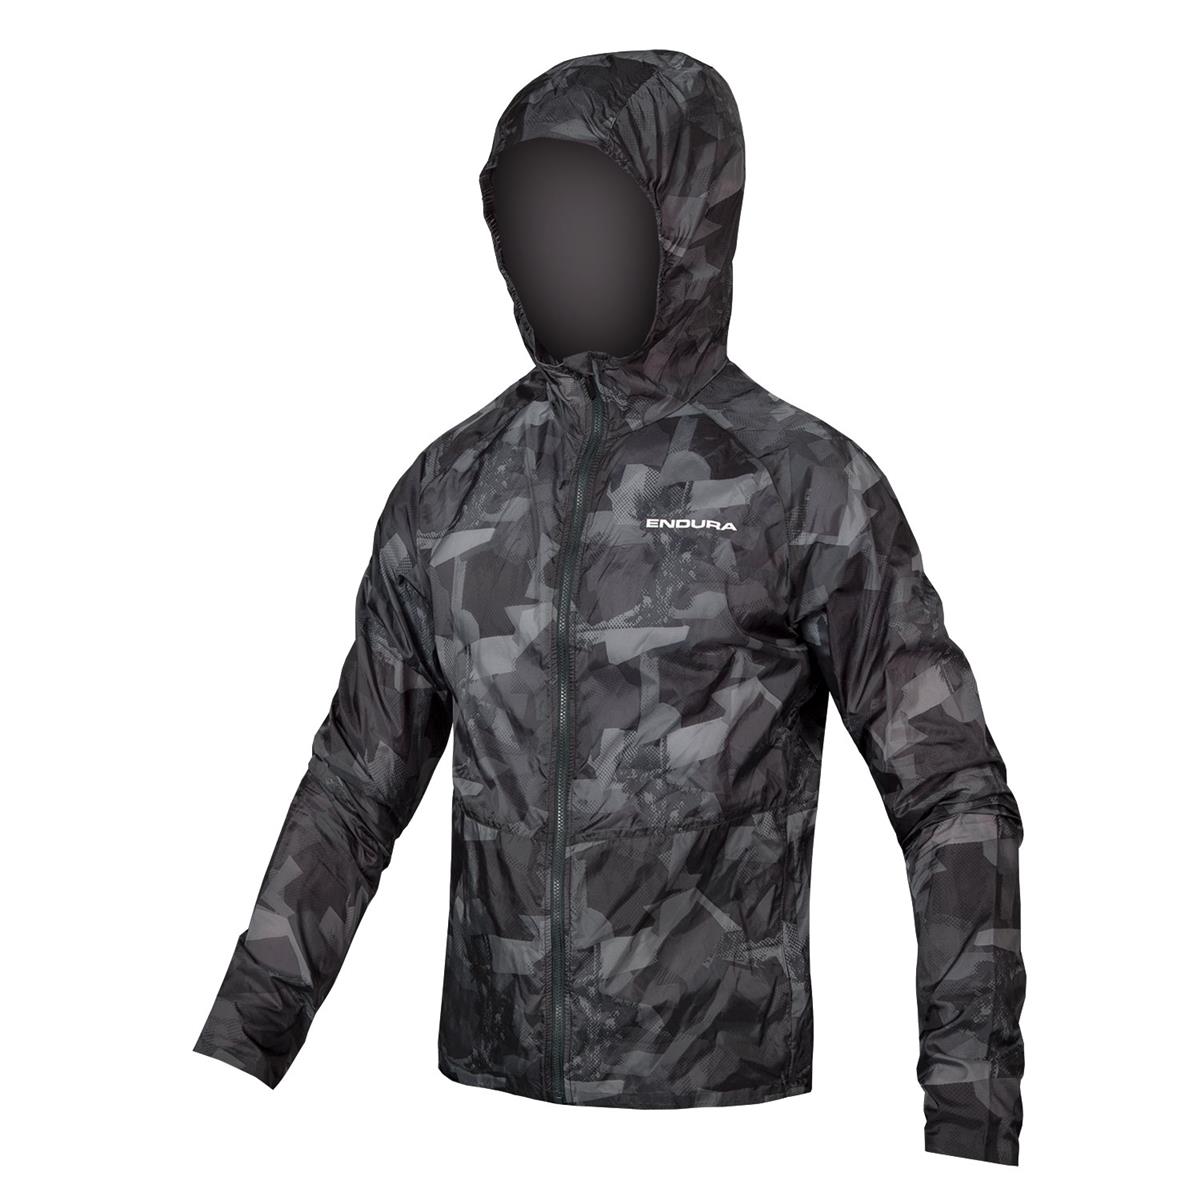 SingleTrack Durajak windproof jacket gray size S